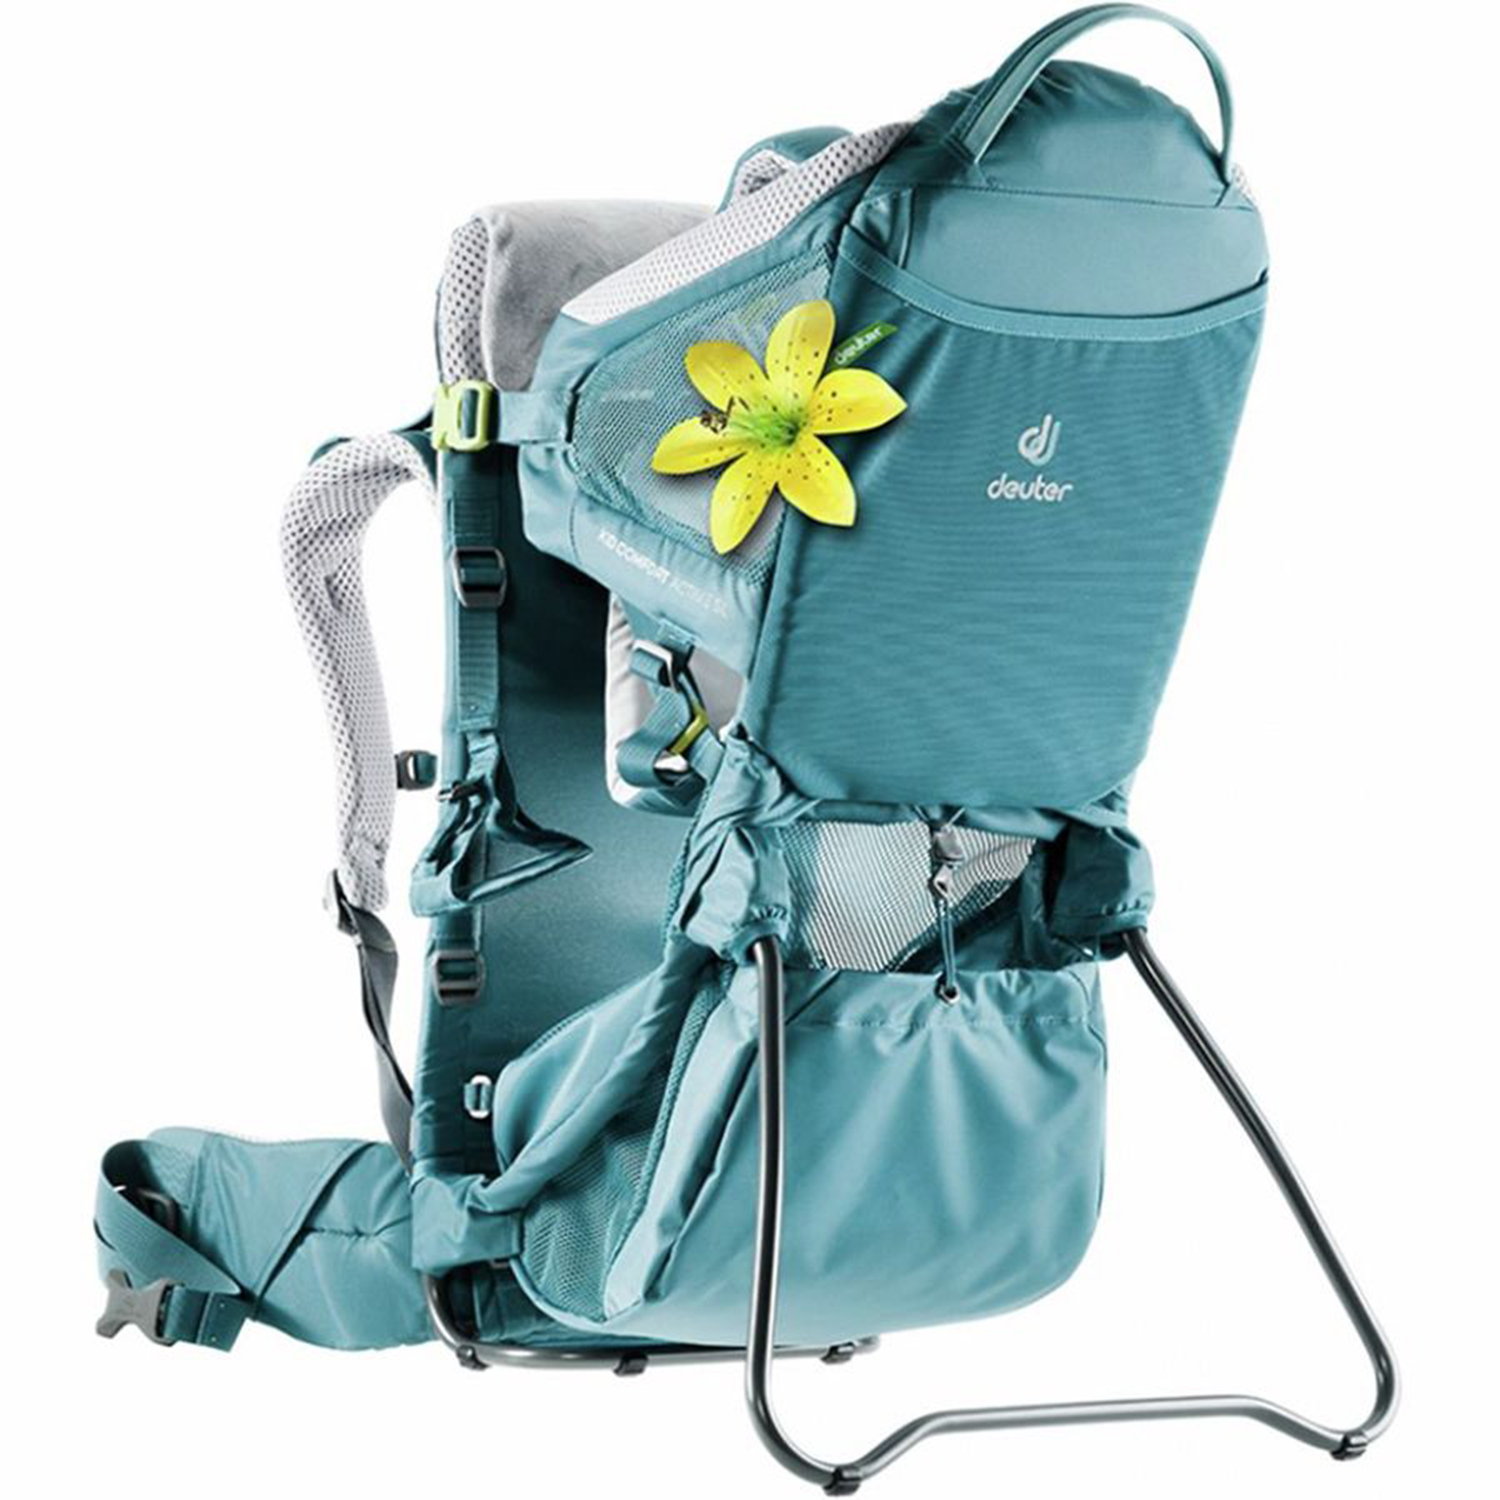 Best Backpack Carrier for a Day Hike (Runner-Up): Deuter Kid Comfort Active SL 